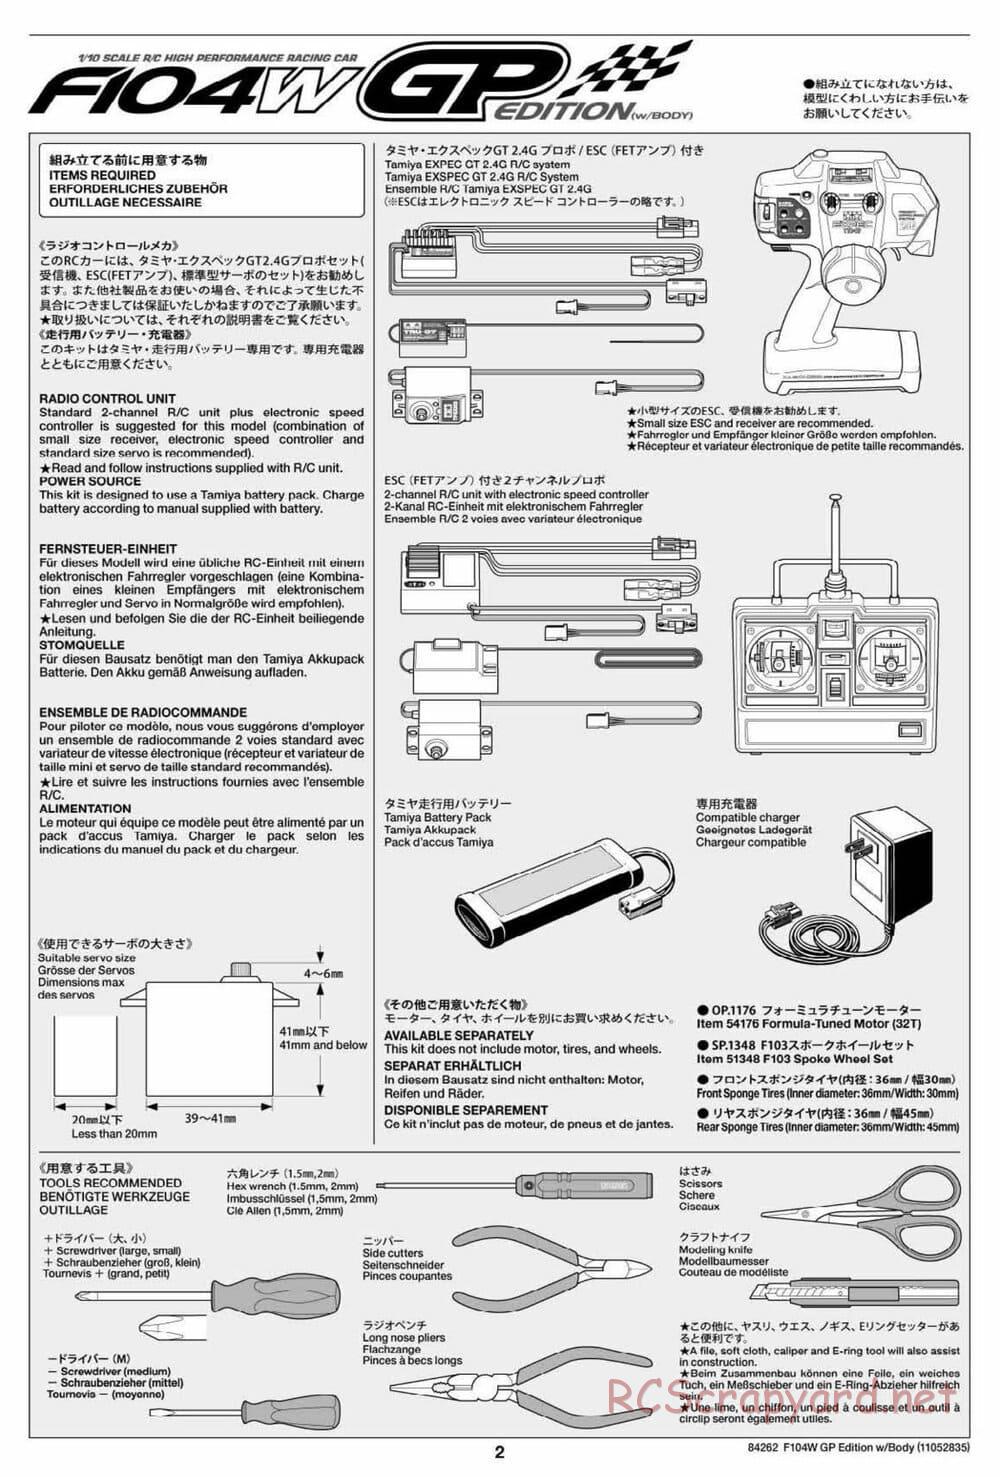 Tamiya - F104W GP Chassis - Manual - Page 2